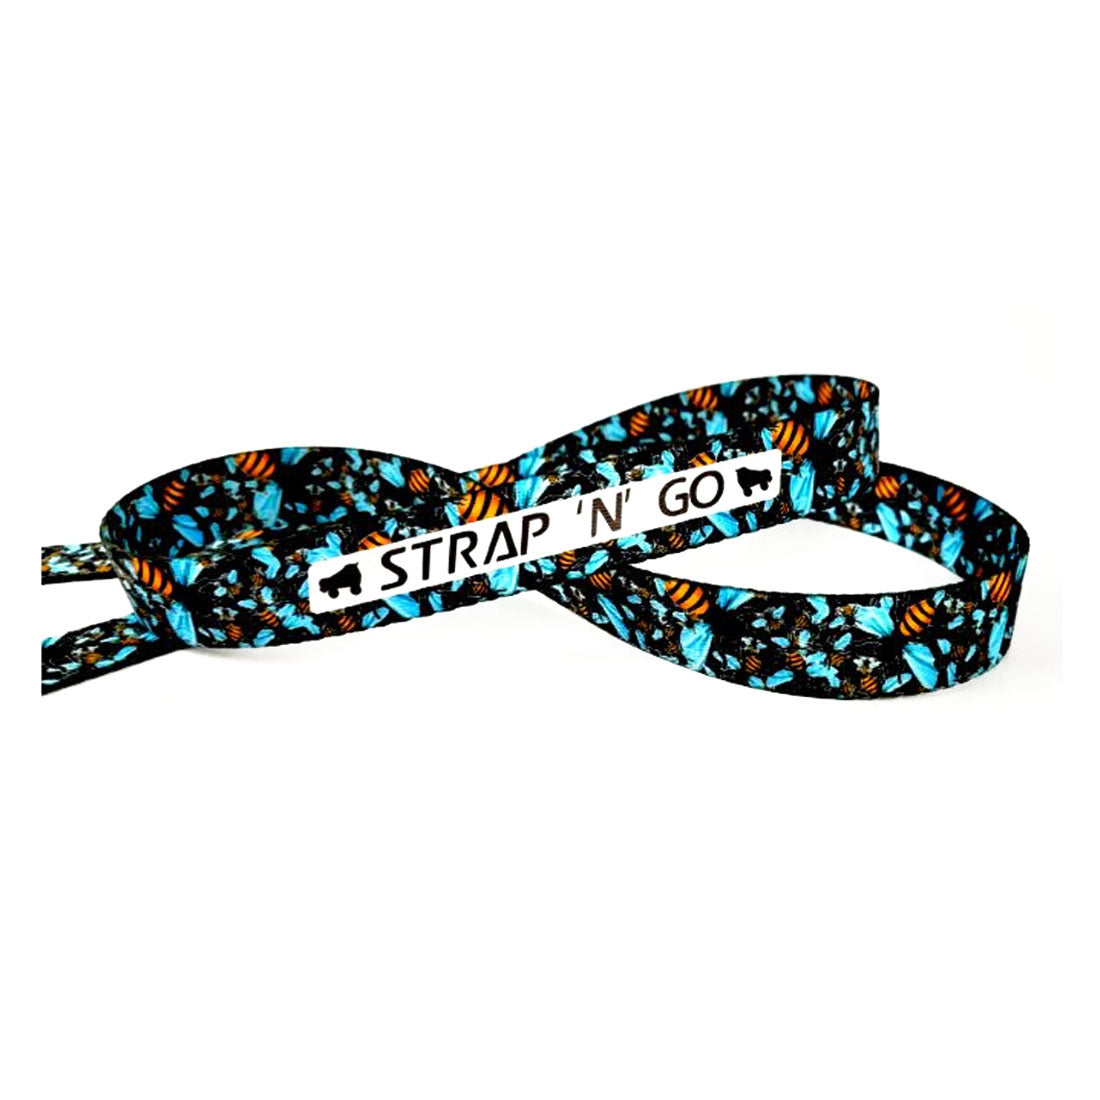 Strap N Go Skate Noose/Leash - Patterns Bees Roller Skate Accessories